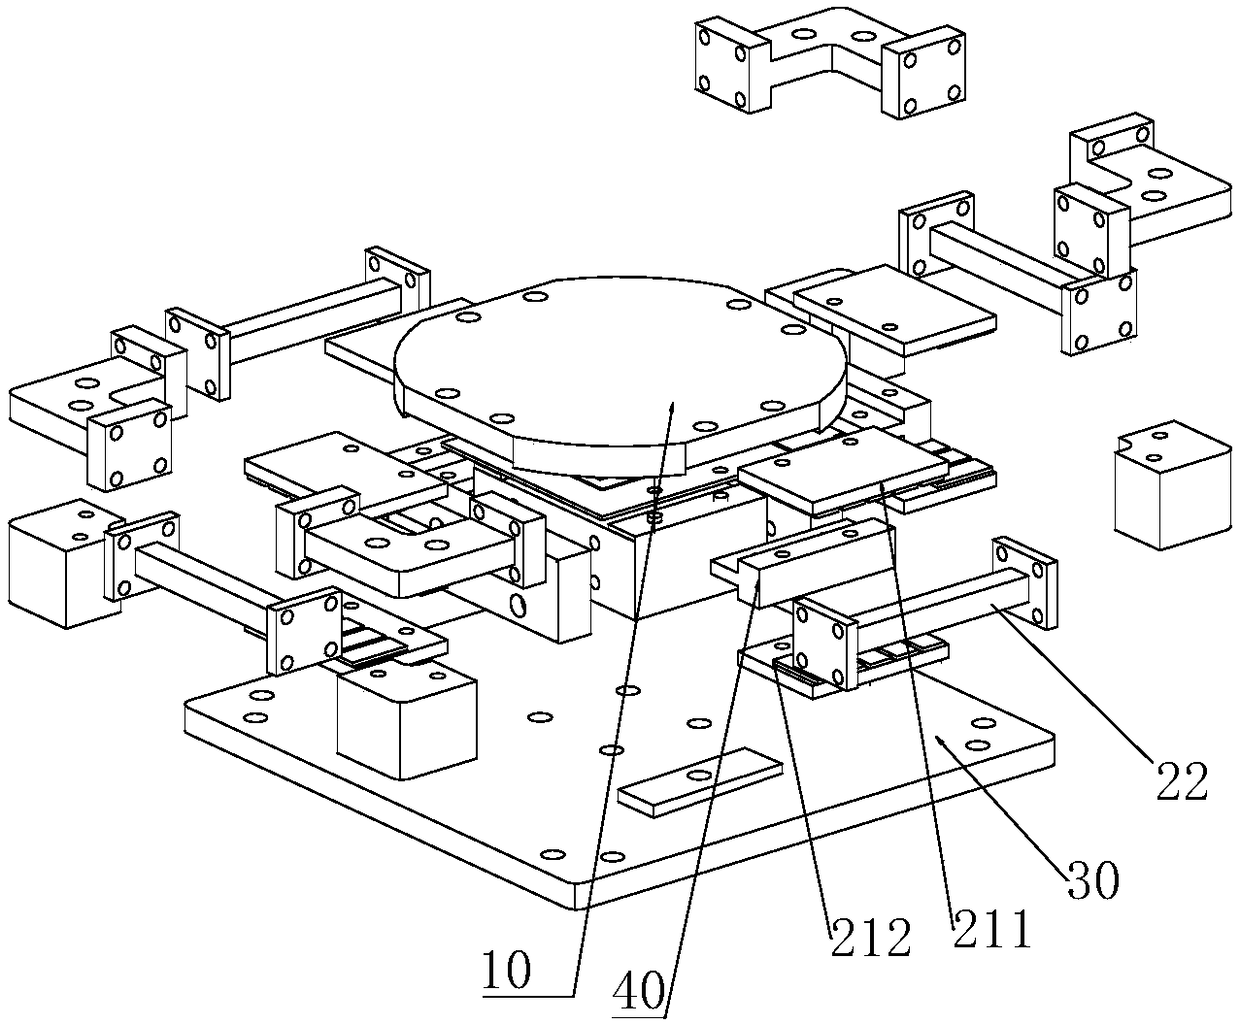 Redundant drive planar motion platform applied to optoelectronic packaging